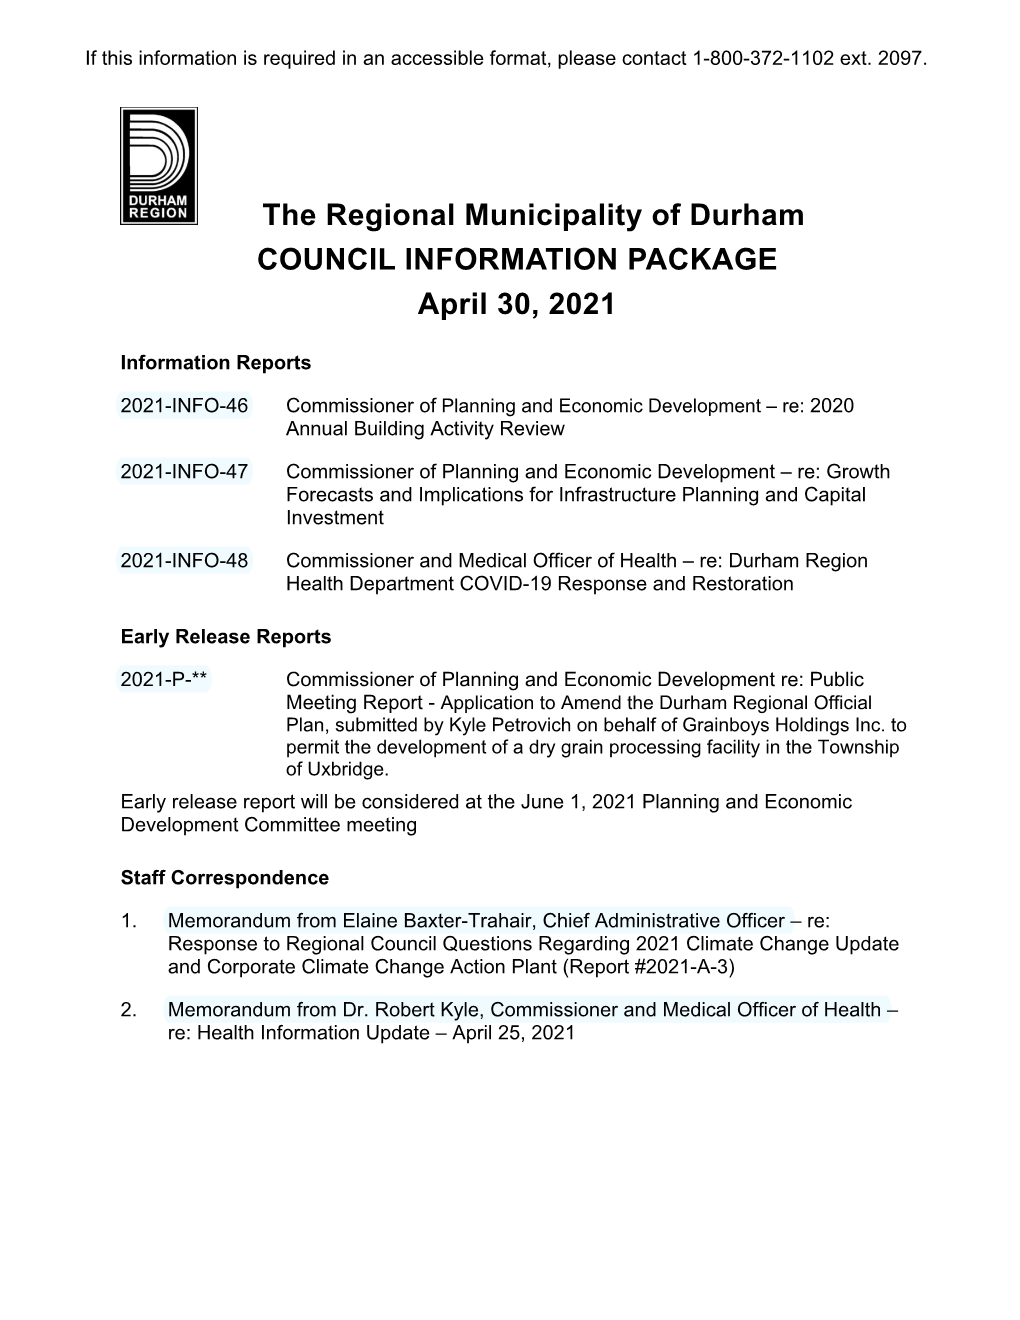 Council Information Package, April 30, 2021